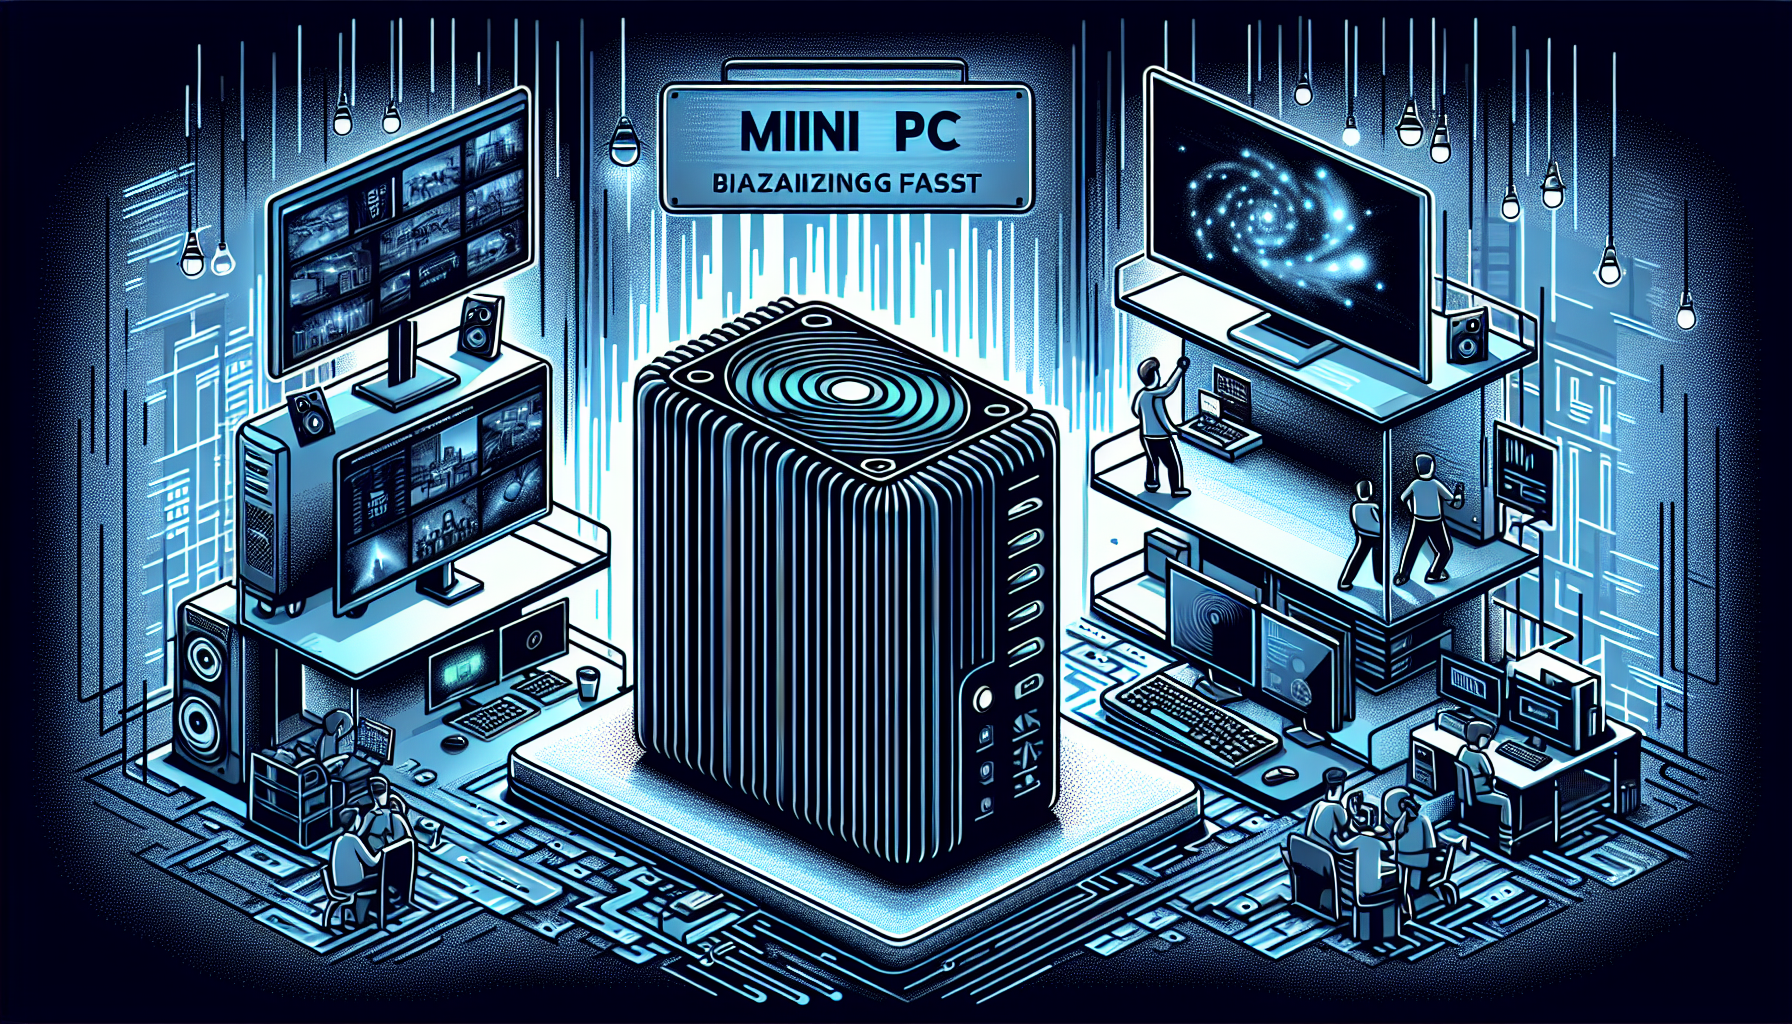 How Powerful Are Mini PCs?